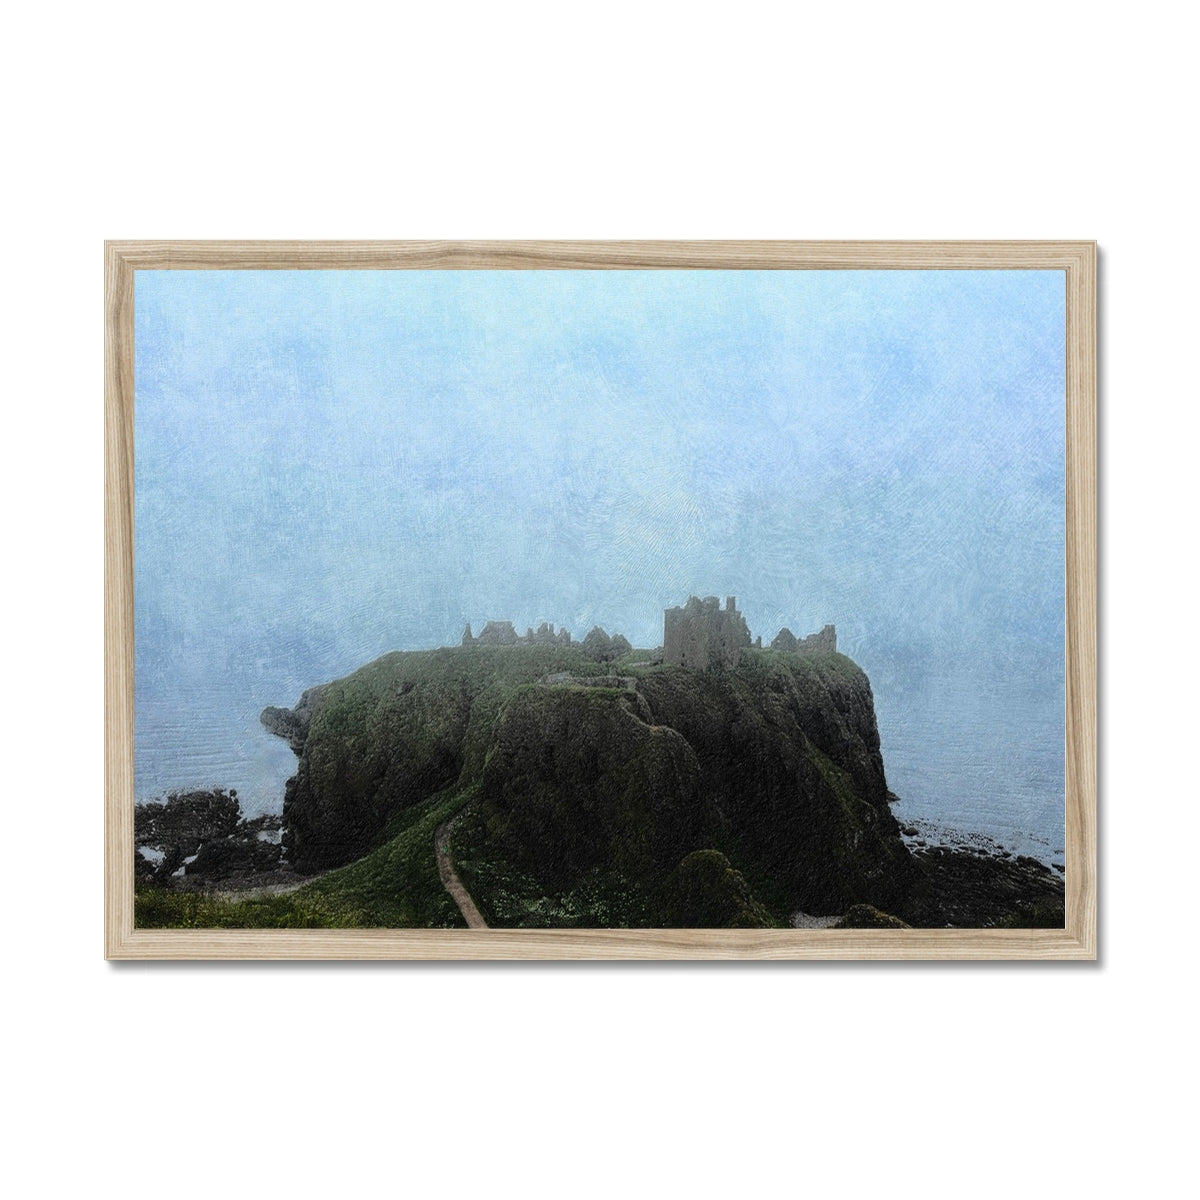 Dunnottar Castle Mist Painting | Framed Prints From Scotland-Framed Prints-Scottish Castles Art Gallery-A2 Landscape-Natural Frame-Paintings, Prints, Homeware, Art Gifts From Scotland By Scottish Artist Kevin Hunter